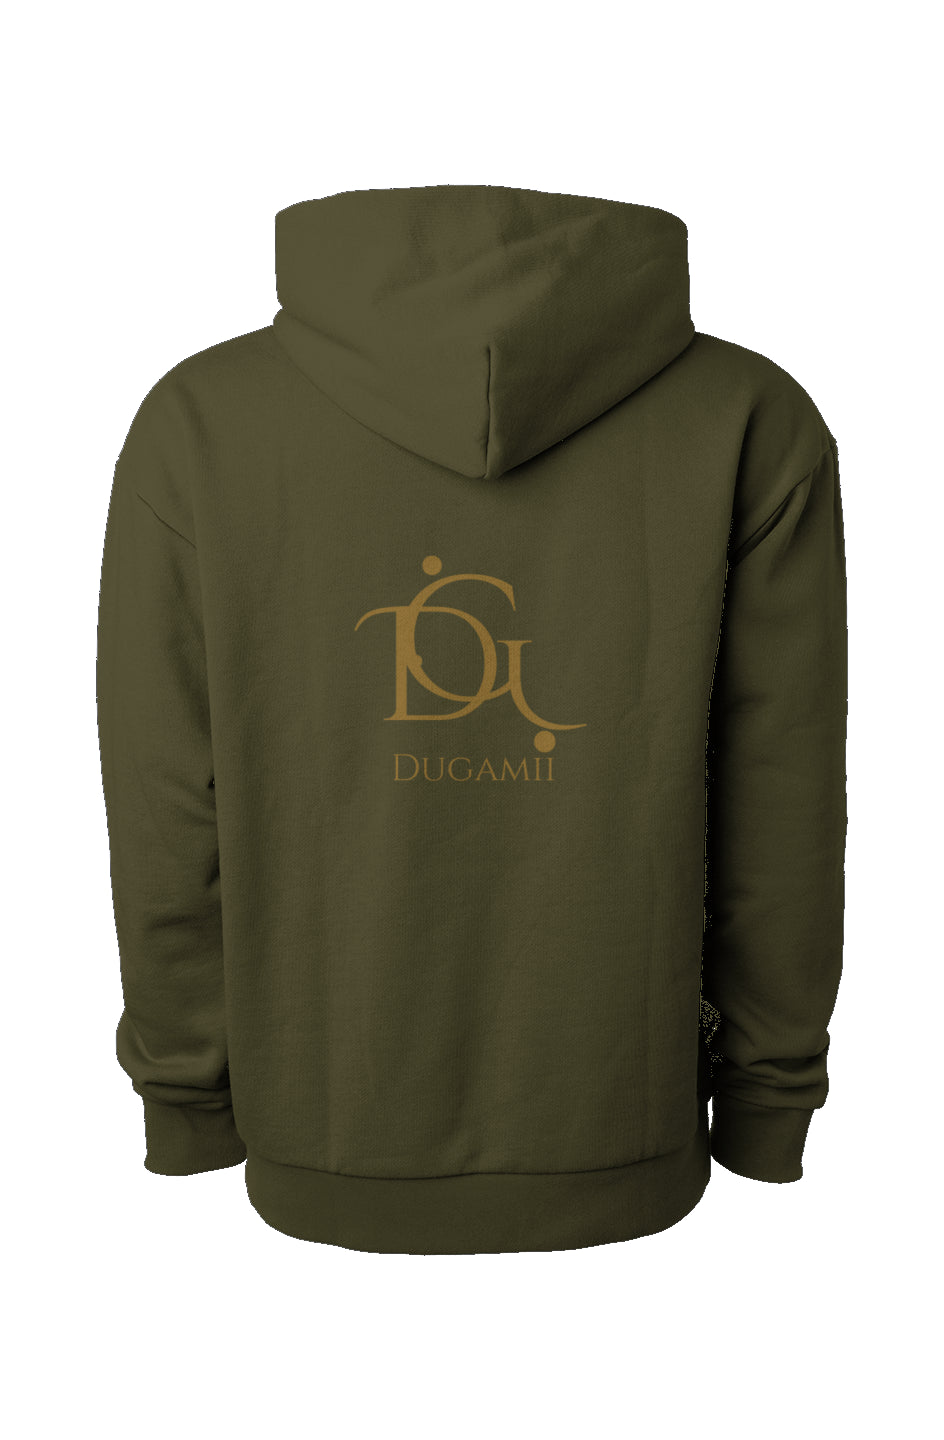 Men's DuGamii Designer Luxury Olive Hooded Sweatshirt